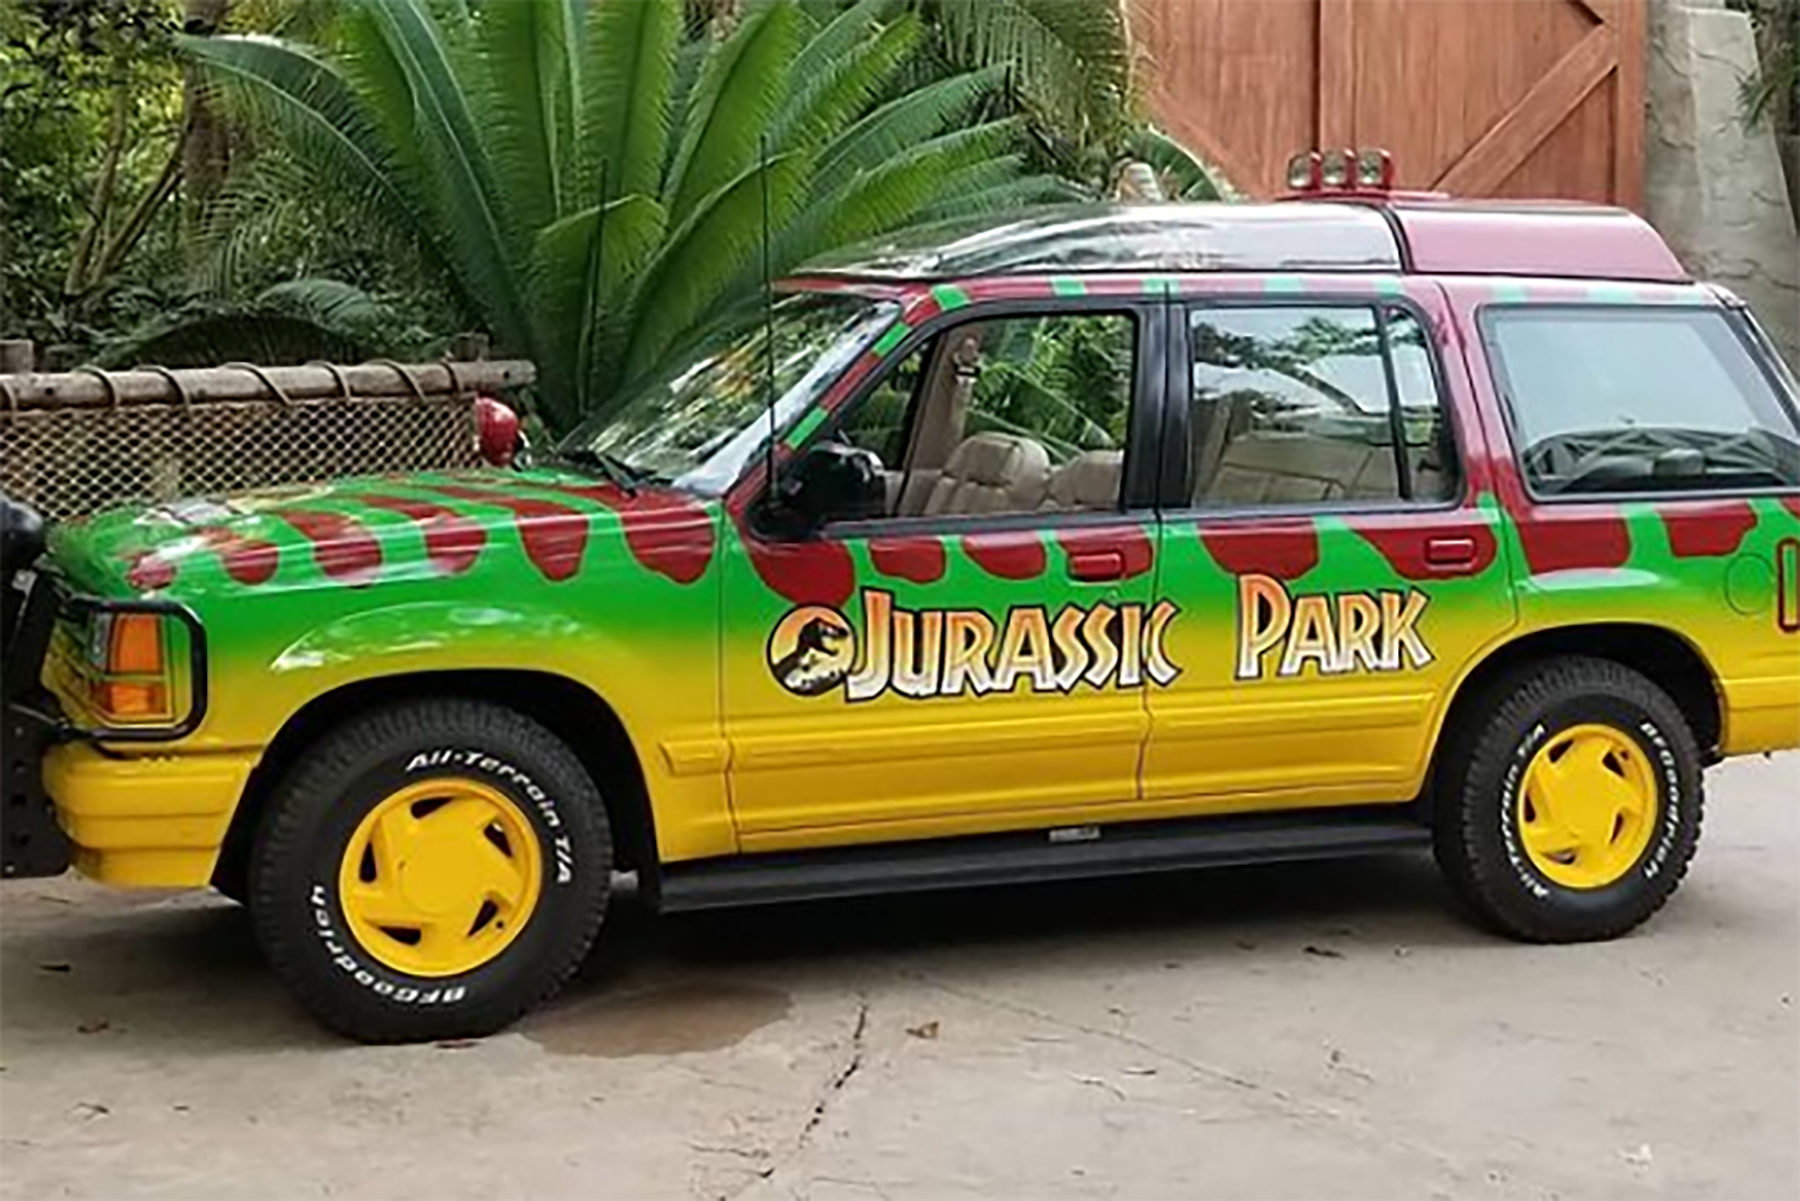 cyrix9445-Jurassic-Park-Ford-Explorer-Instagram-replica-movie.png